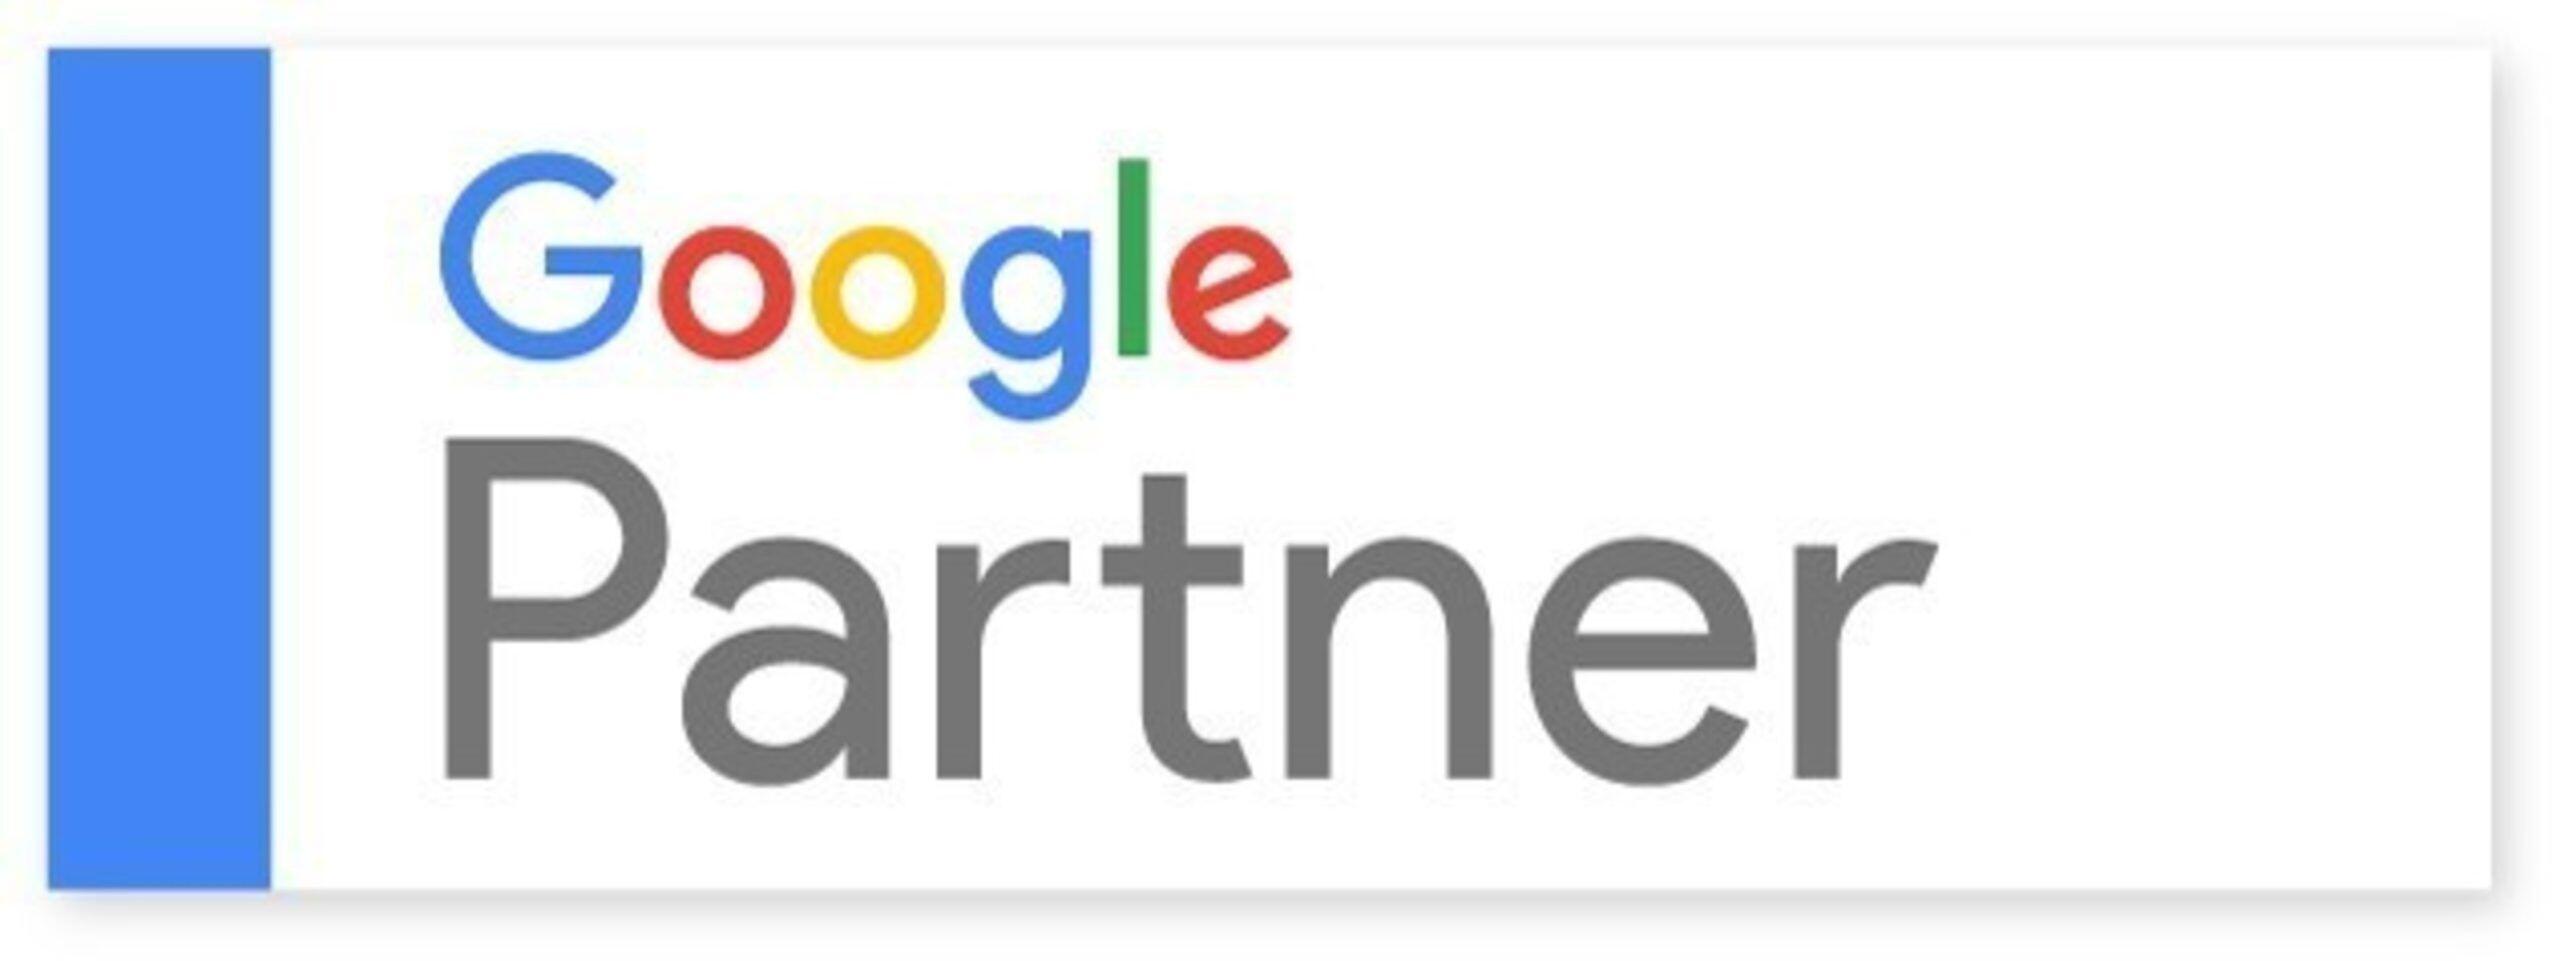 Google-Partner-skills-scaled.jpeg